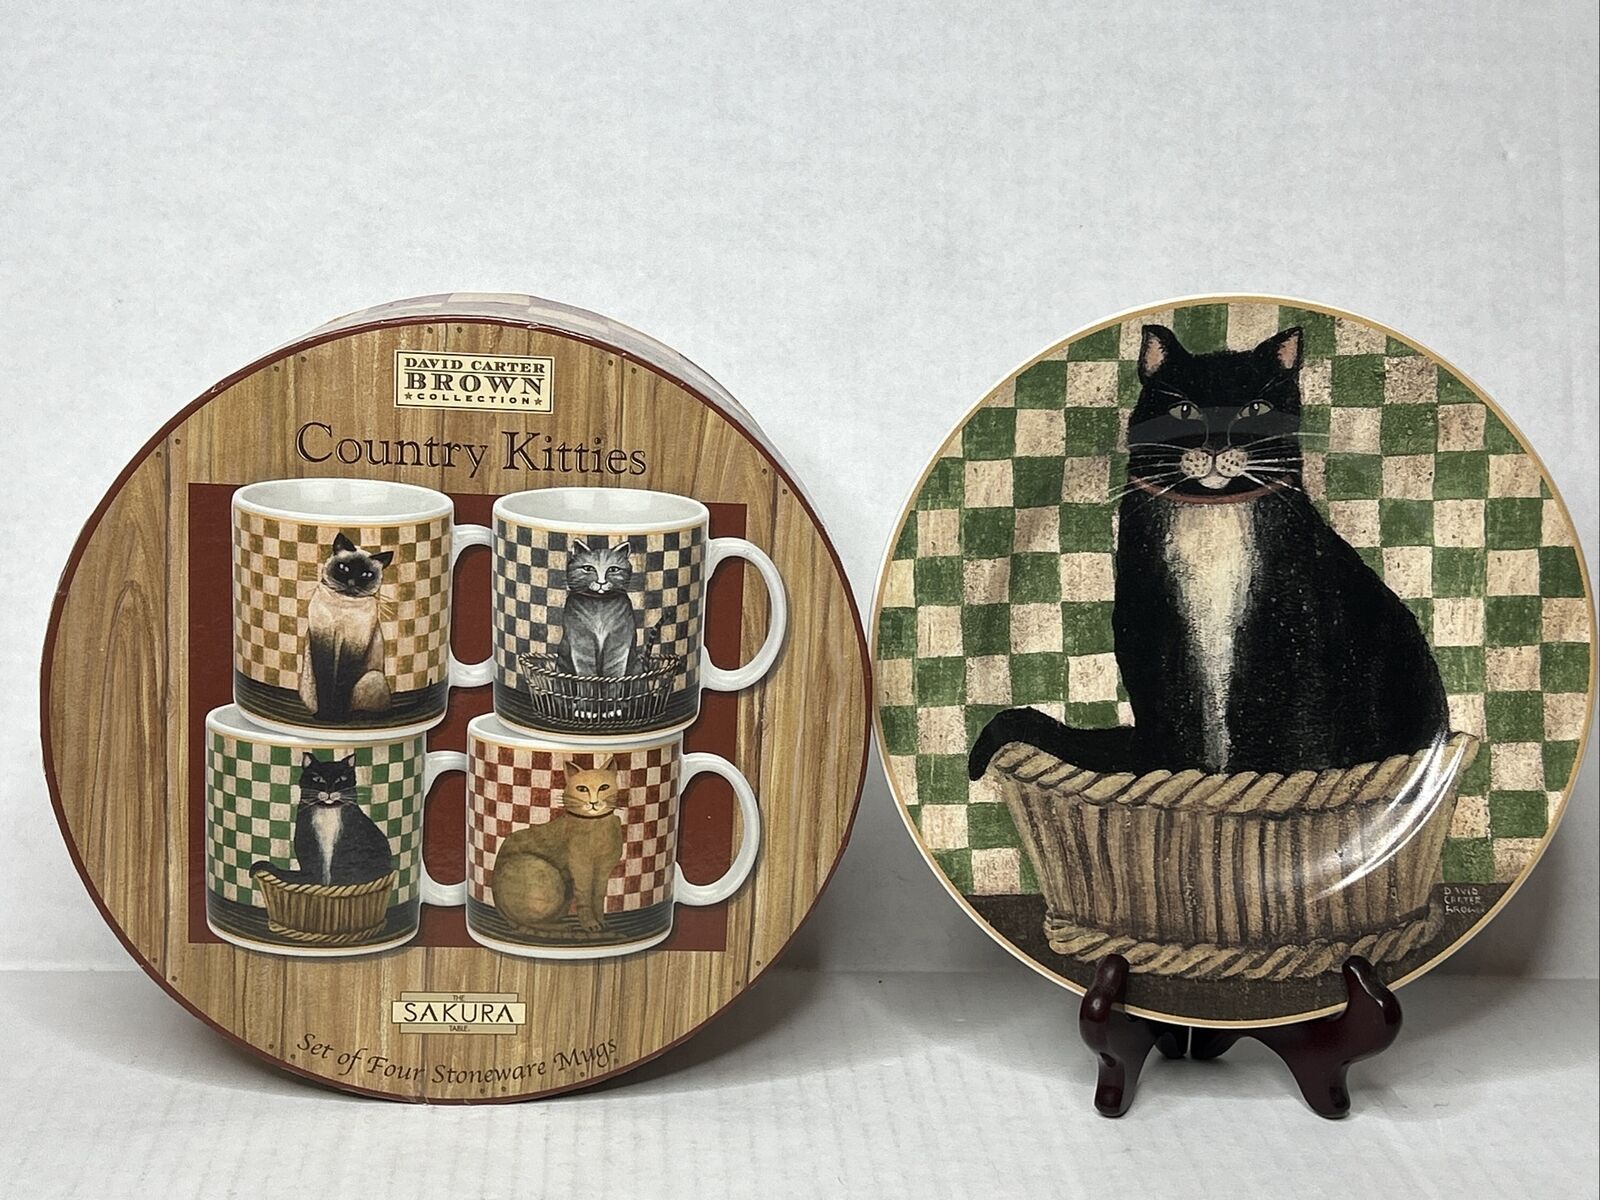 Vintage, Oneida, Sakura Country  Kitties. By David Carter Brown. For Cat Lovers